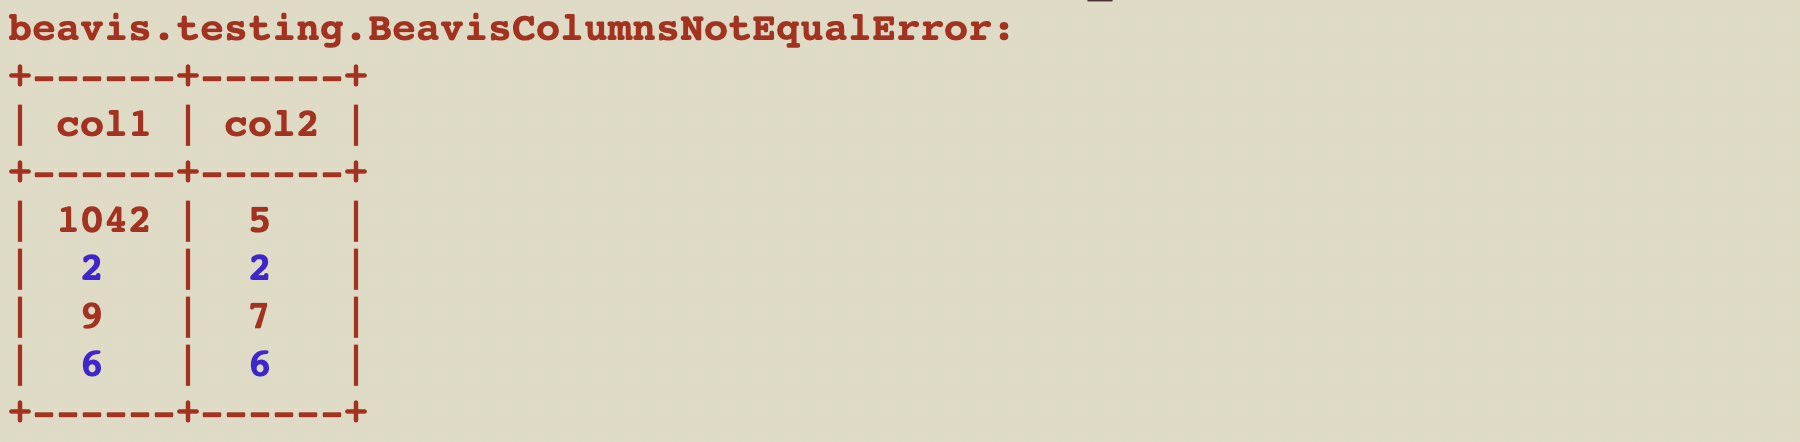 beavis_columns_not_equal_error.png